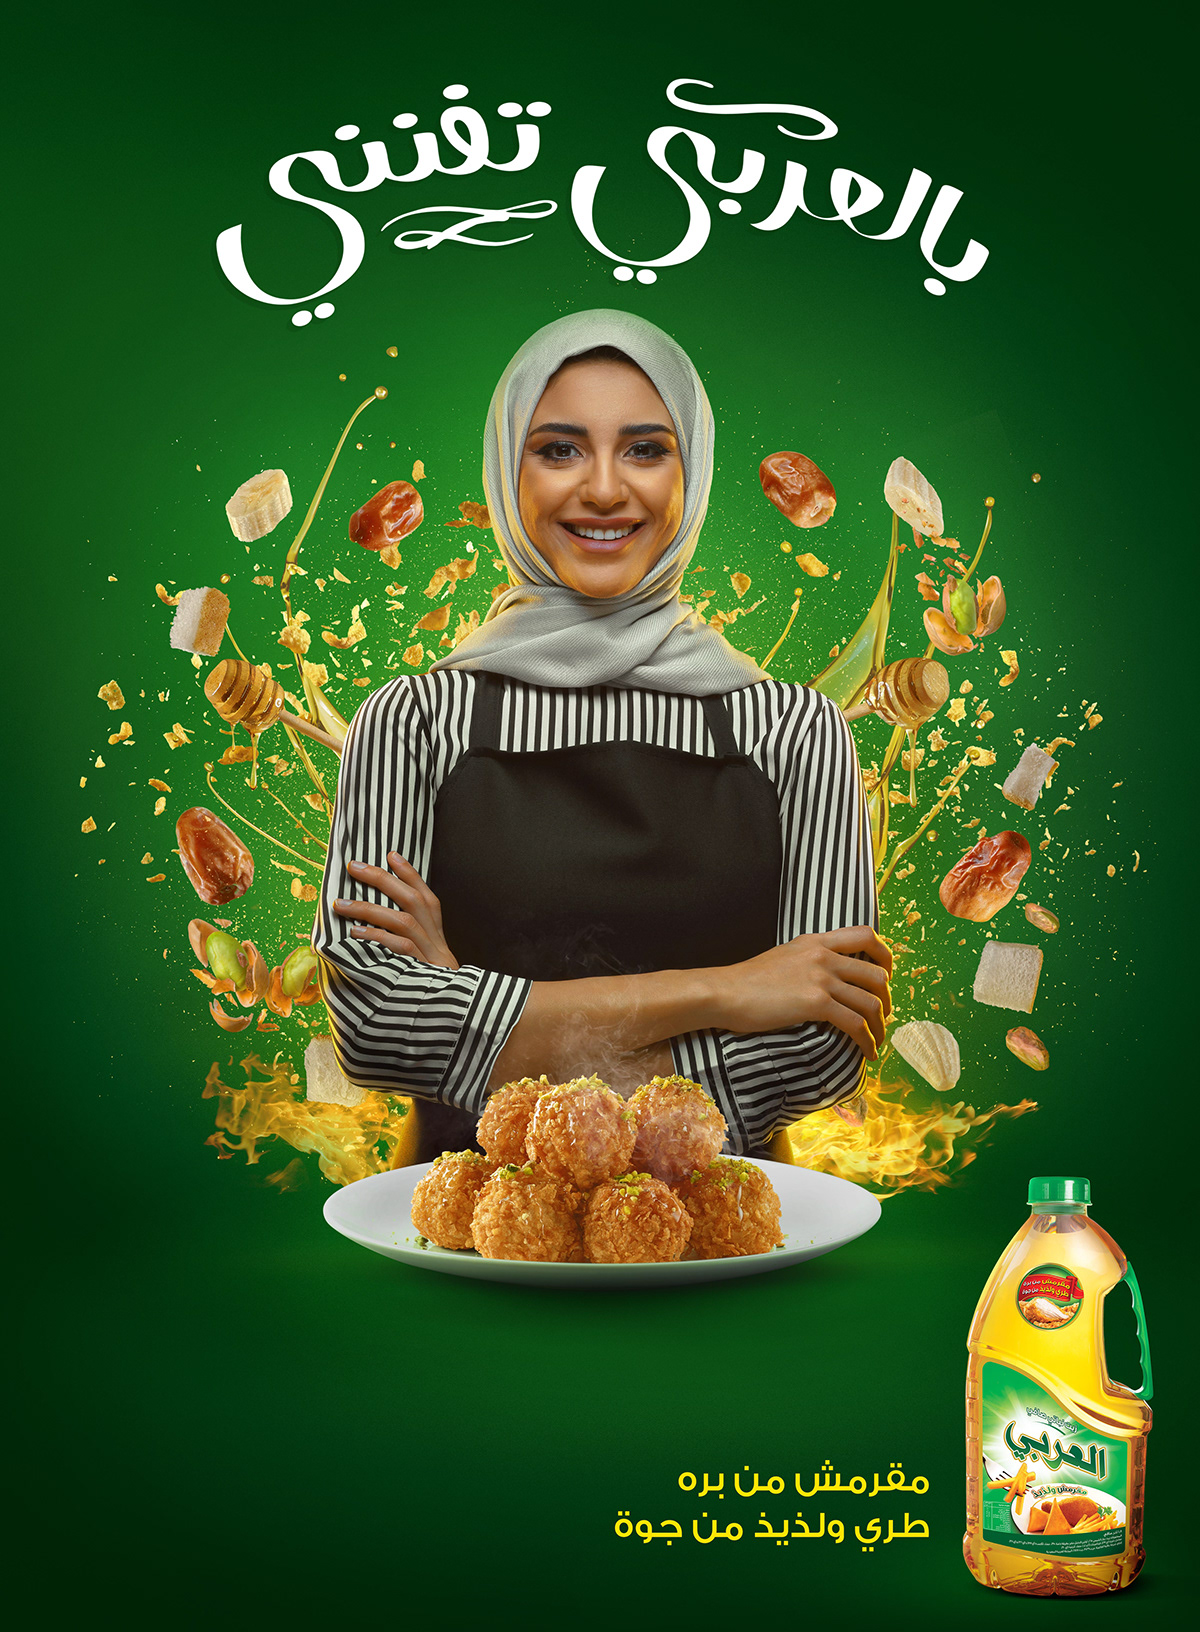 Al Arabi oil Saudi recipe UAE dubai creative Advertising  art